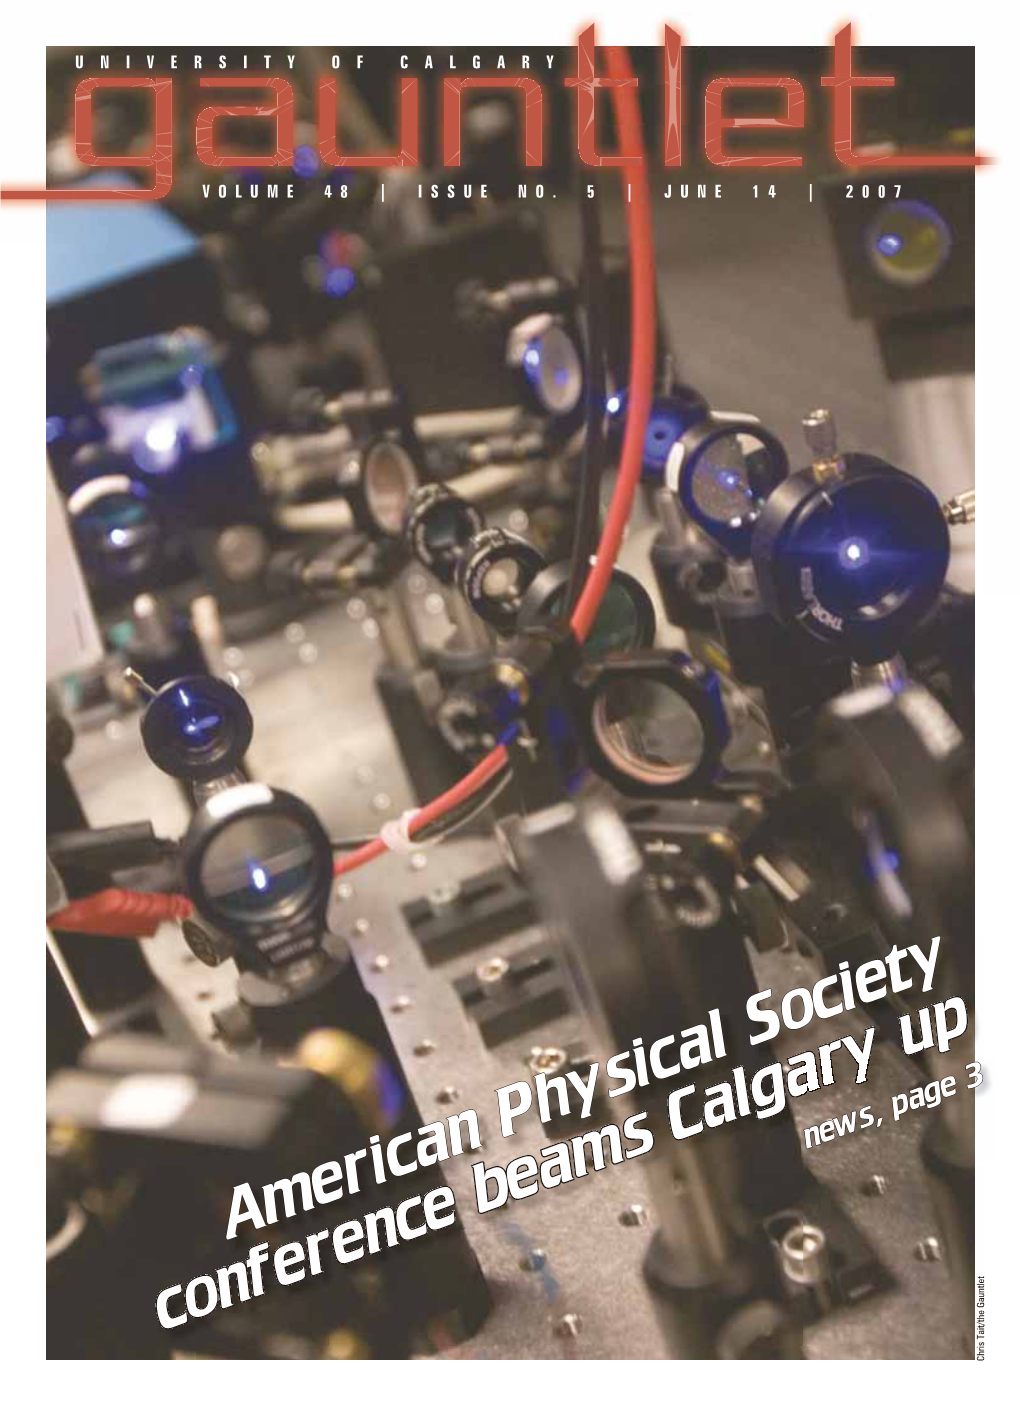 American Physical Society Conference Beams Calgary Up